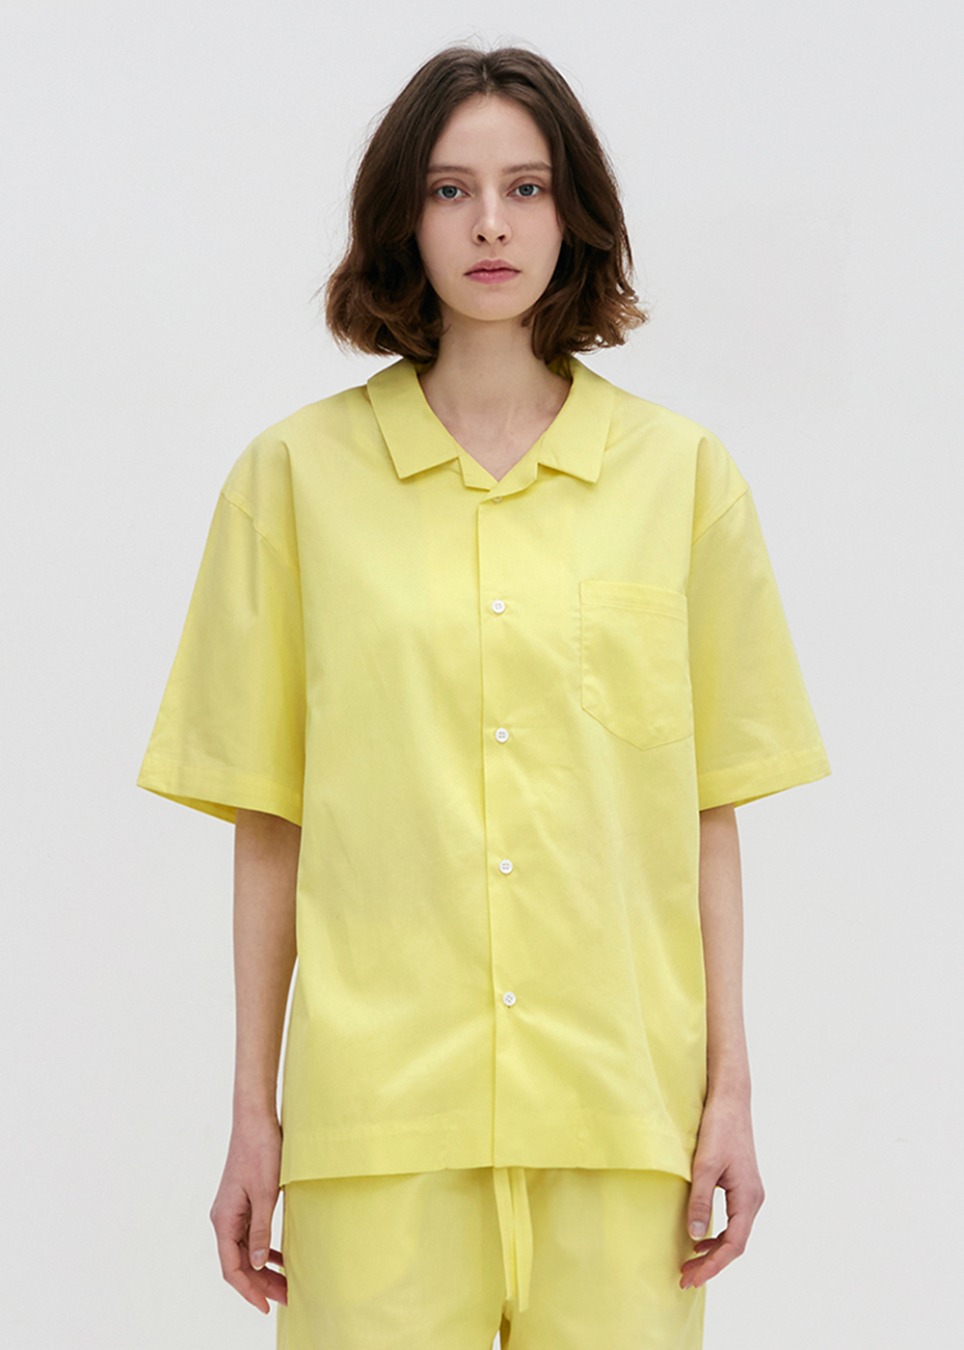 Stay Pajamas Short Sleeve Shirt - Lemon Yellow